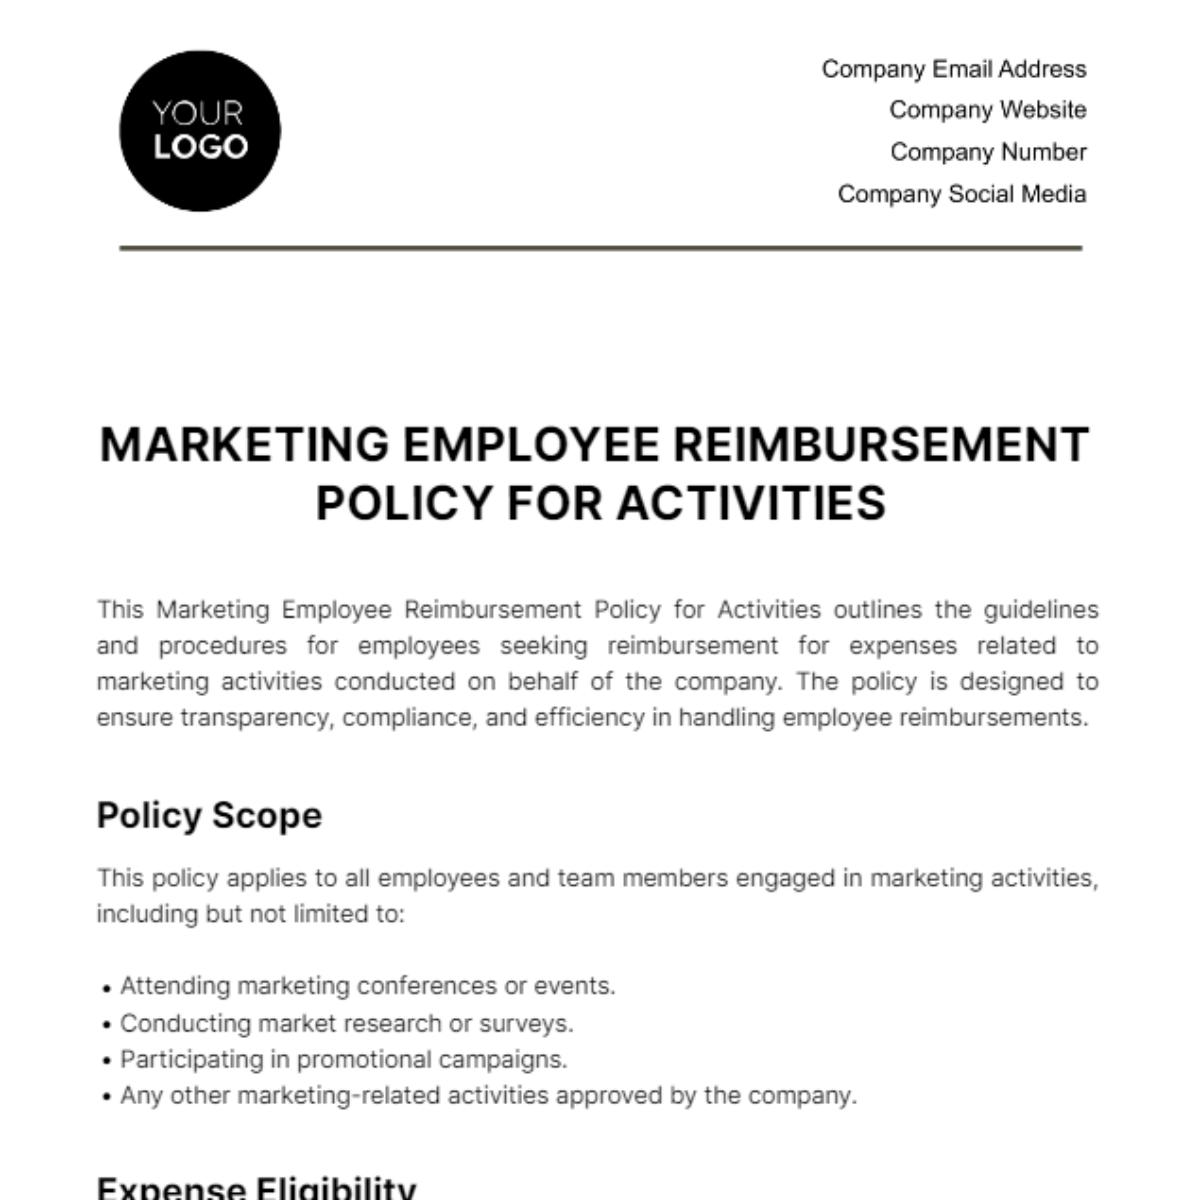 Free Marketing Employee Reimbursement Policy for Activities Template